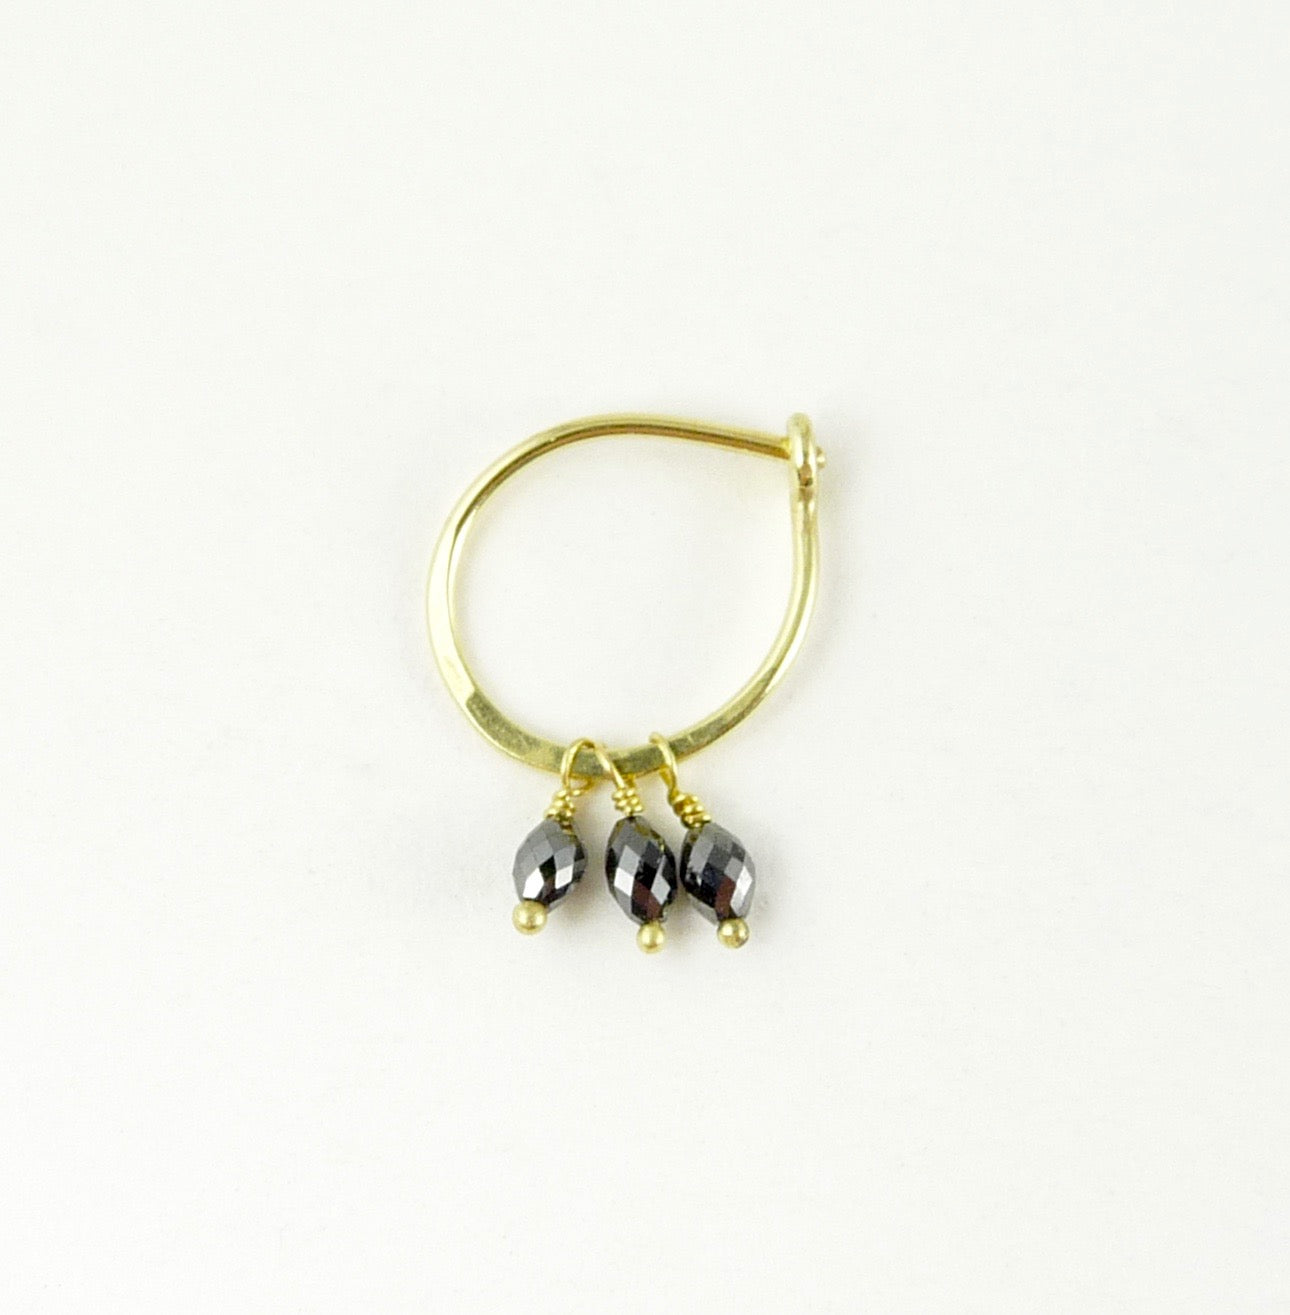 18ct Gold hoop earring with black diamond beads